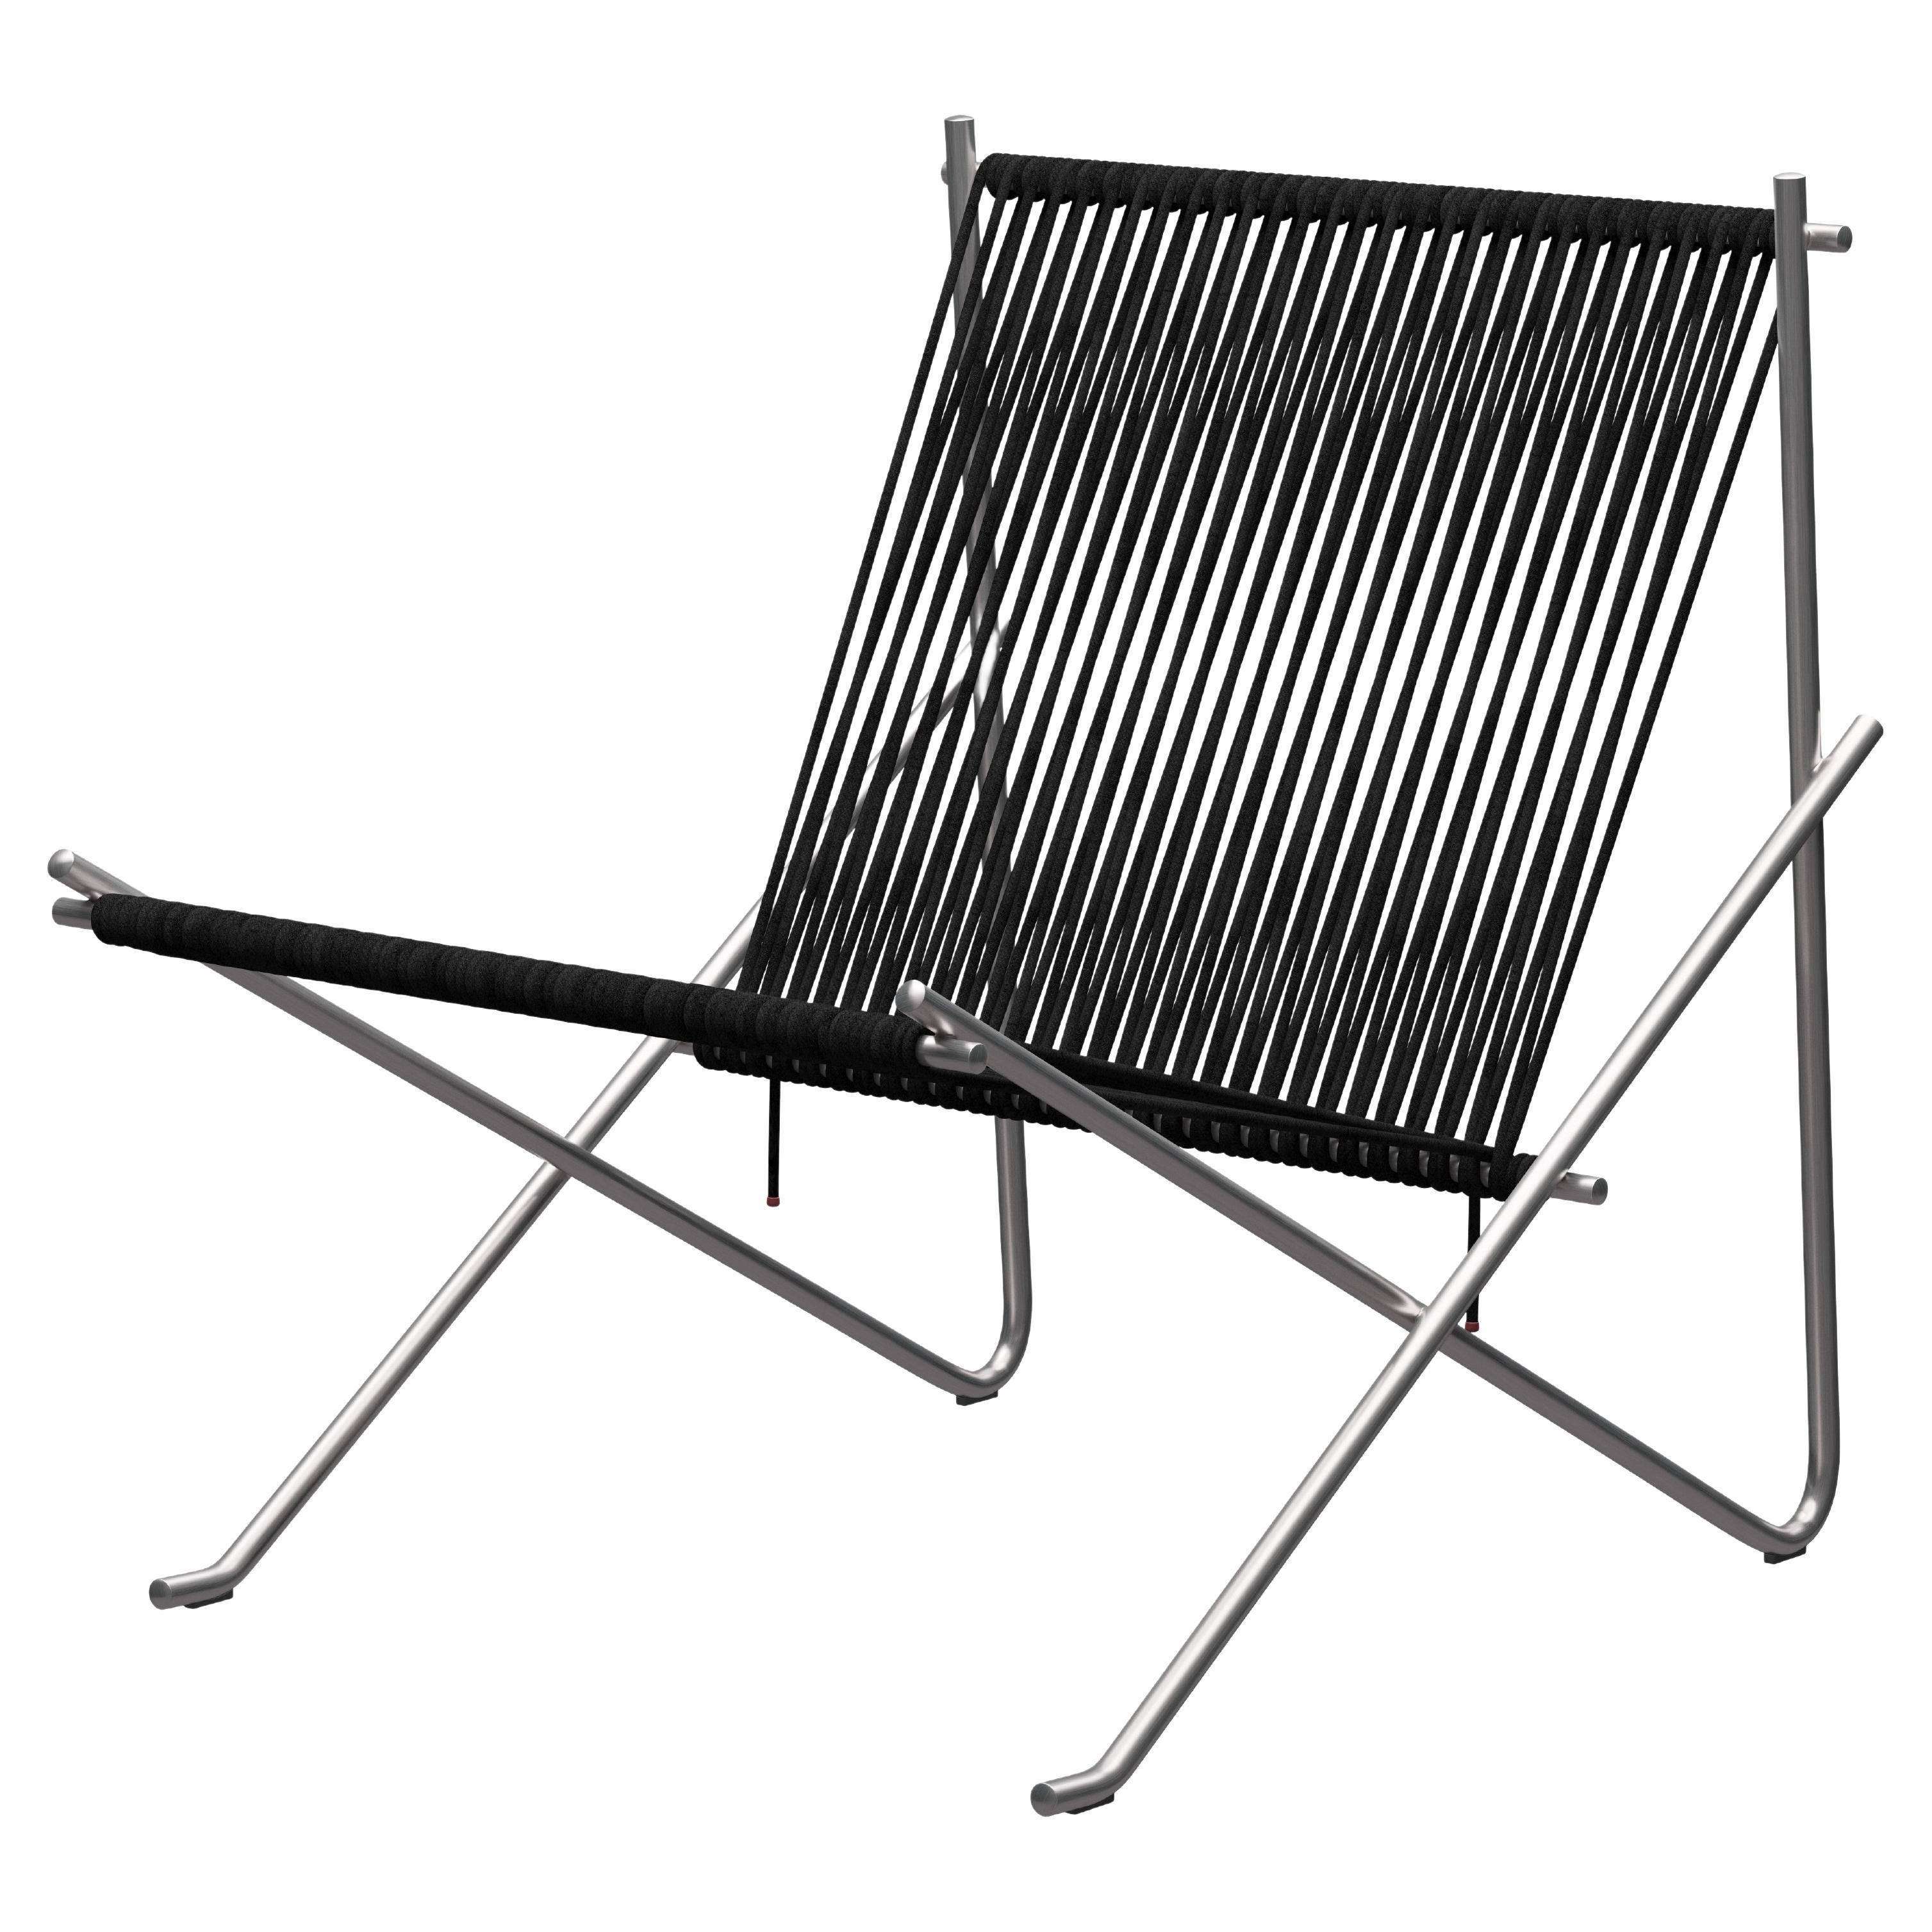 'PK4' Lounge Chair for Fritz Hansen in Black Flag Halyard with Steel Frame